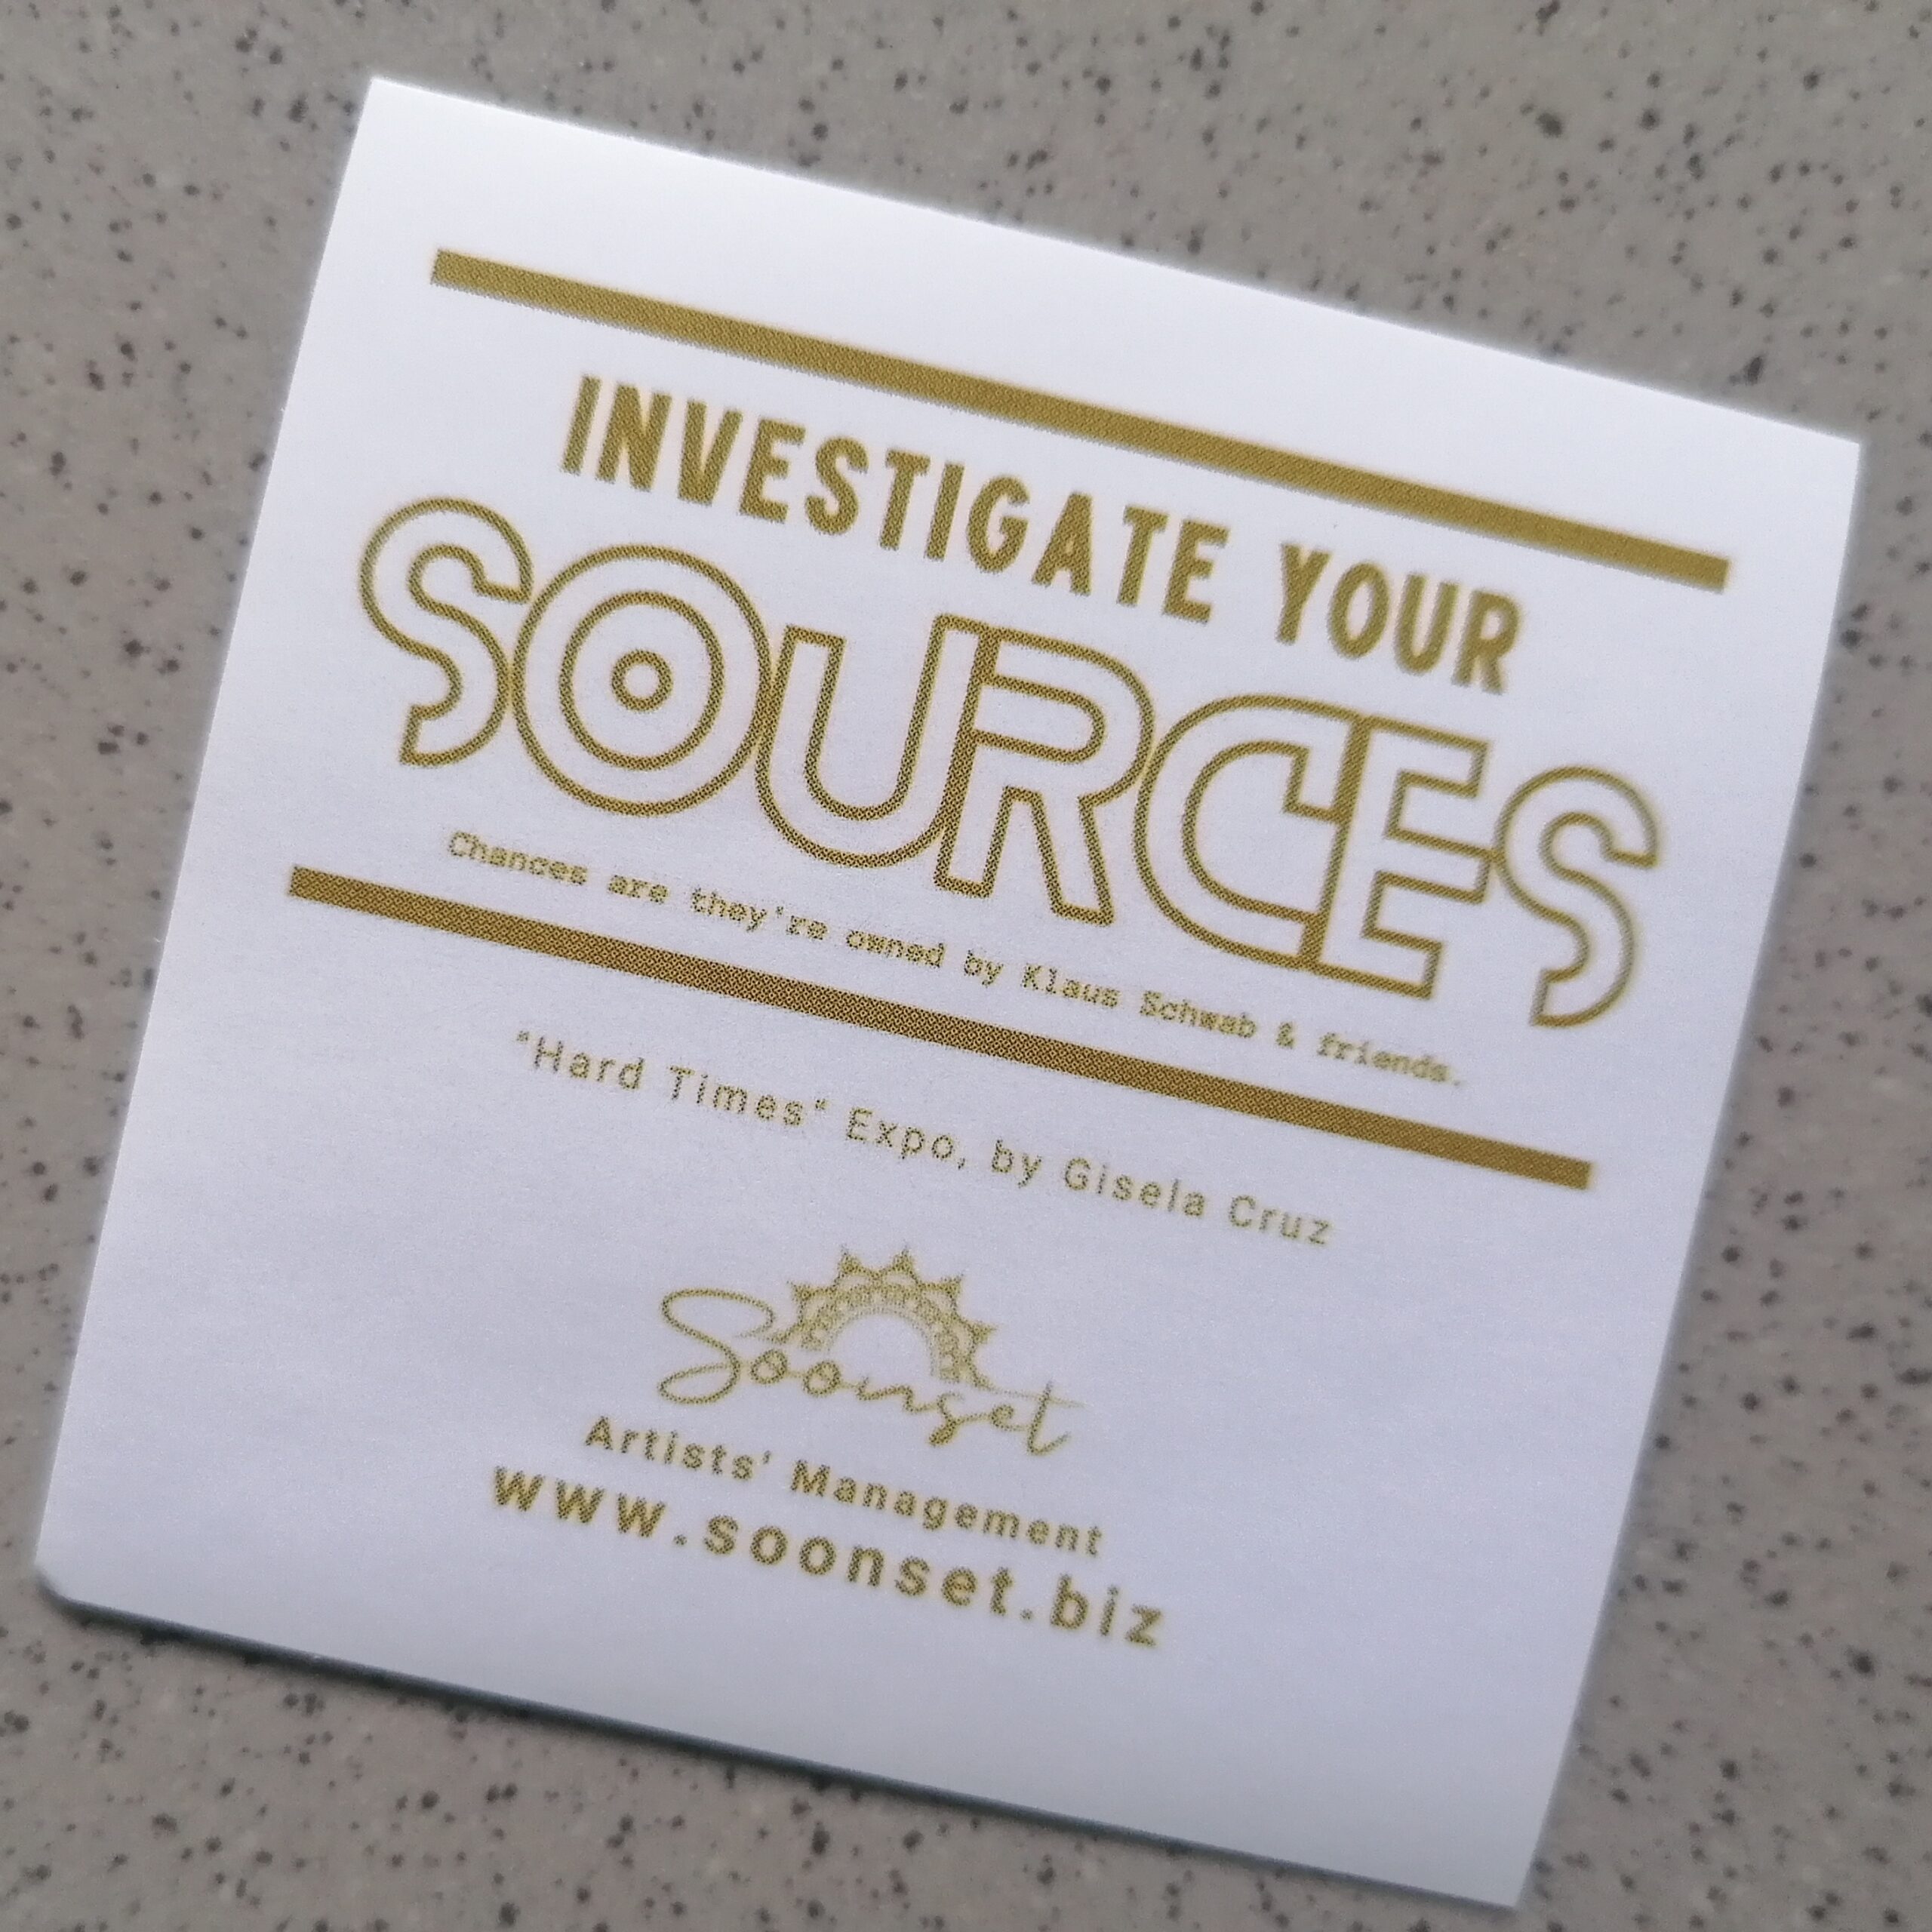 Sticker Investigate Your Sources